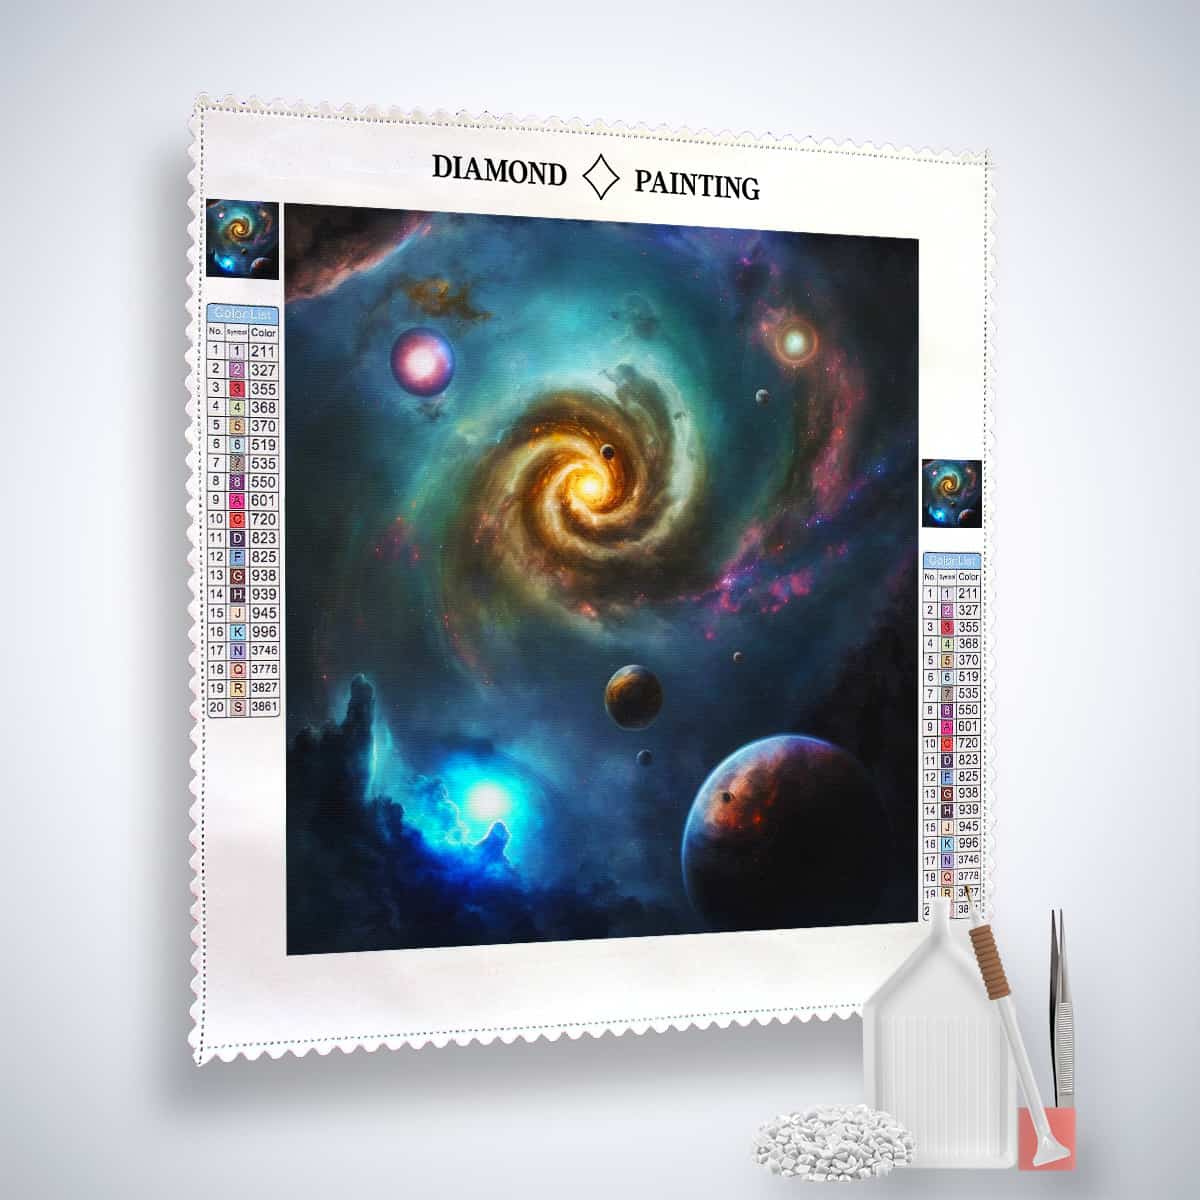 Diamond Painting - Sternbildermagie - gedruckt in Ultra-HD - Neu eingetroffen, Quadratisch, Universum, Weltall